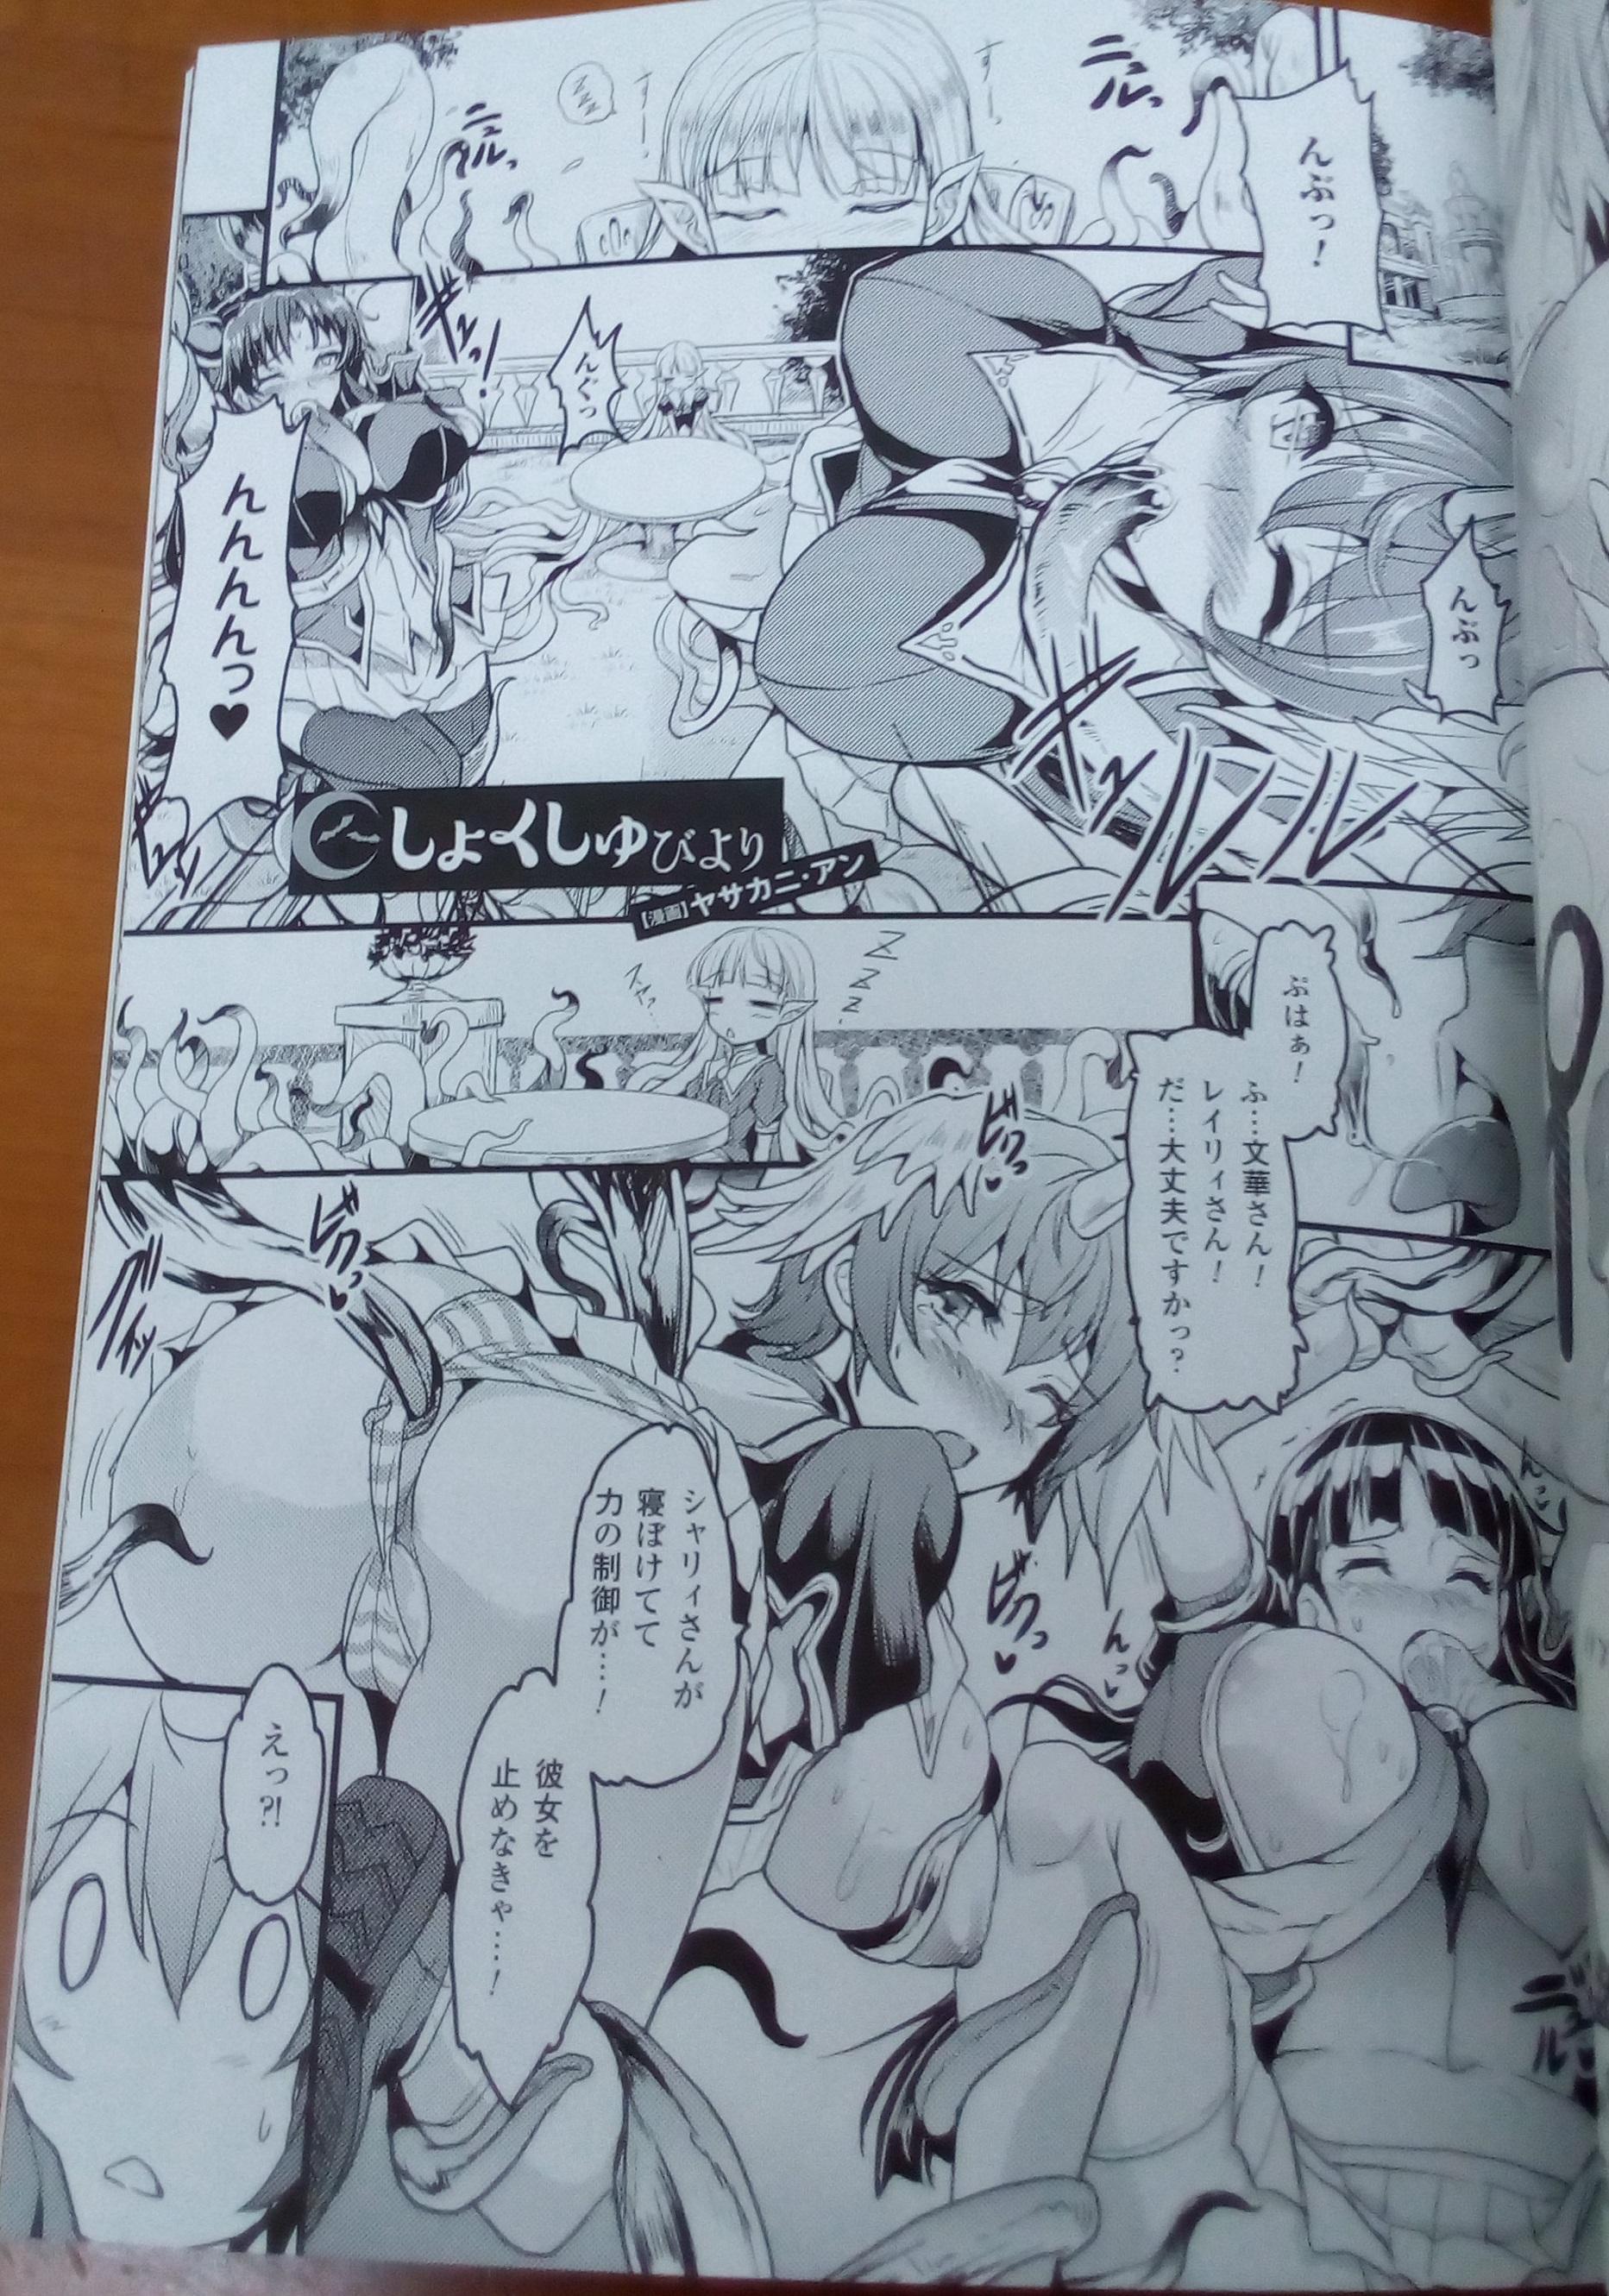 [Erect Sawaru] Shinkyoku no Grimoire III -PANDRA saga 2nd story-  Append book [Photoed] 31